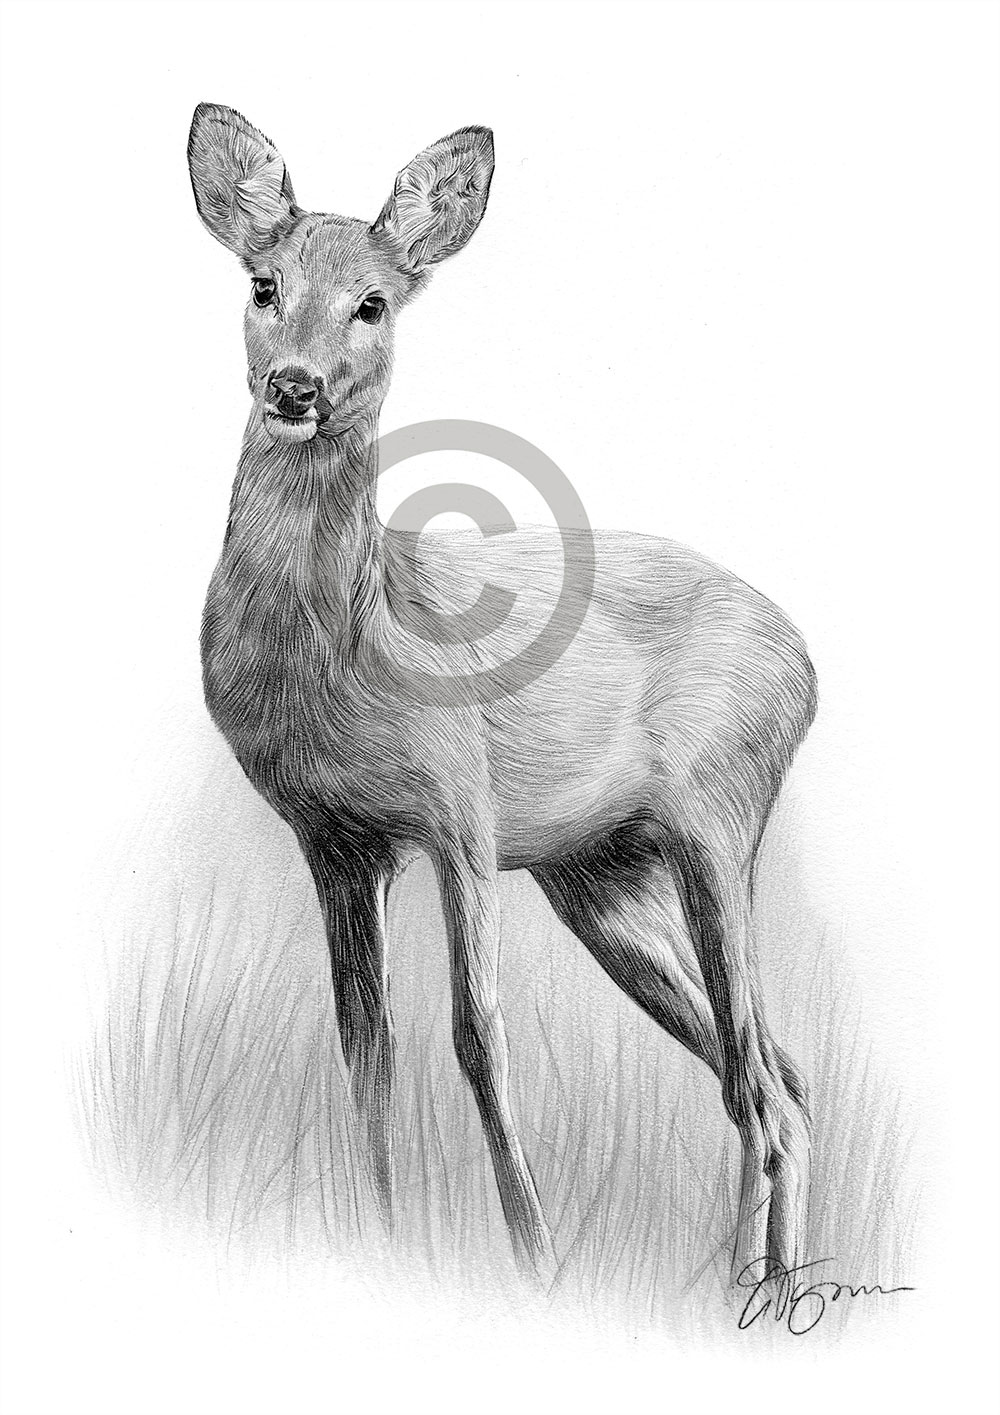 Pencil drawing of a roe deer by artist Gary Tymon